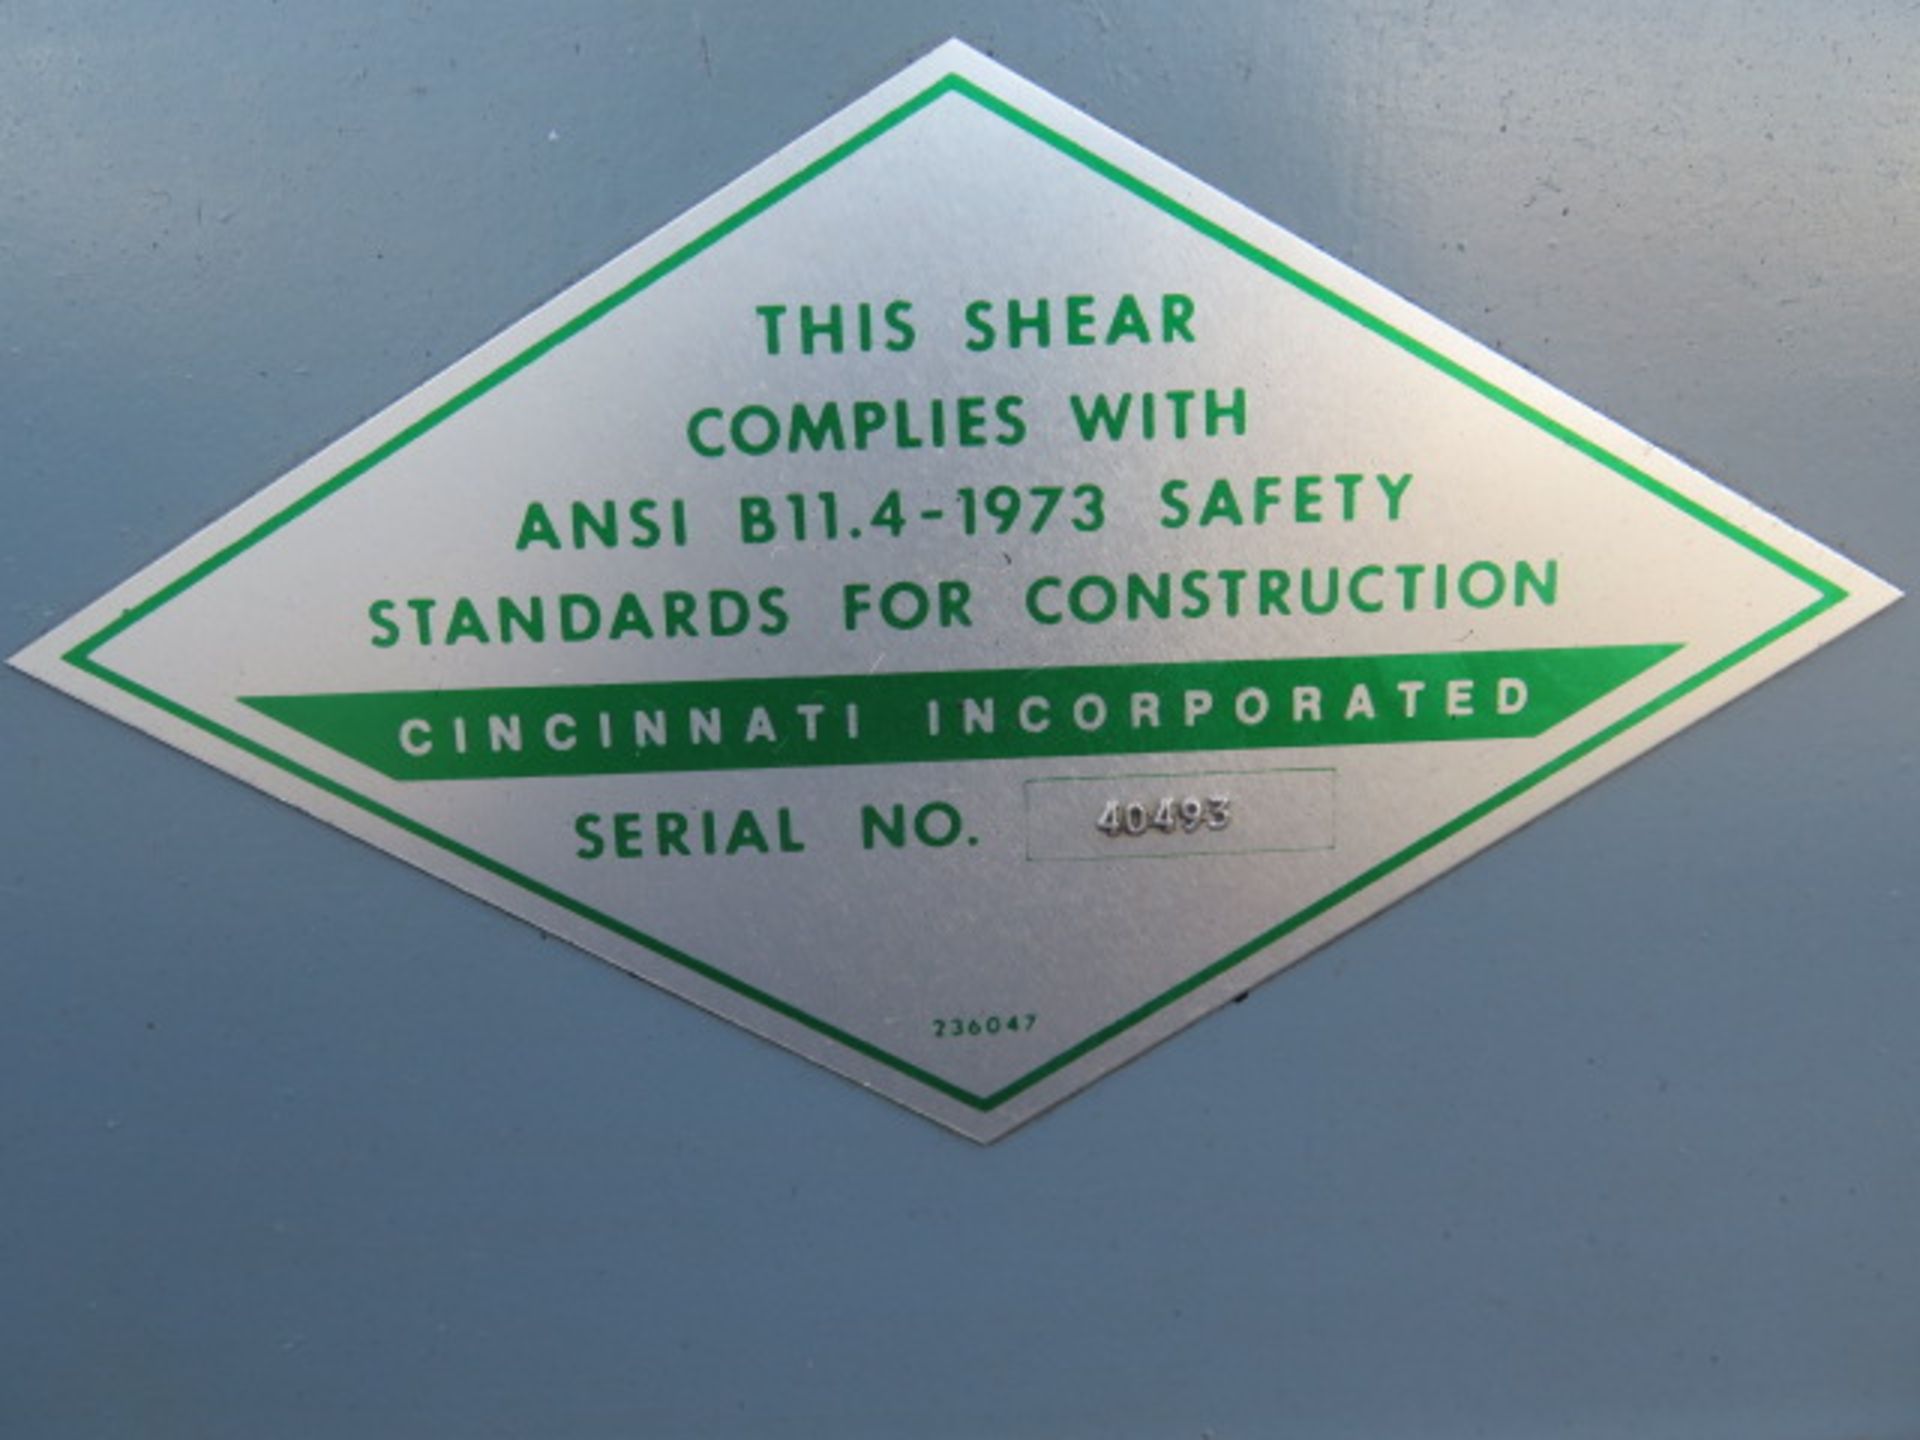 Cincinnati 1812 1/4" x 12' Cap Power Shear s/n 40493 w/ Cinc Controls and Back Gauging, SOLD AS IS - Image 12 of 12